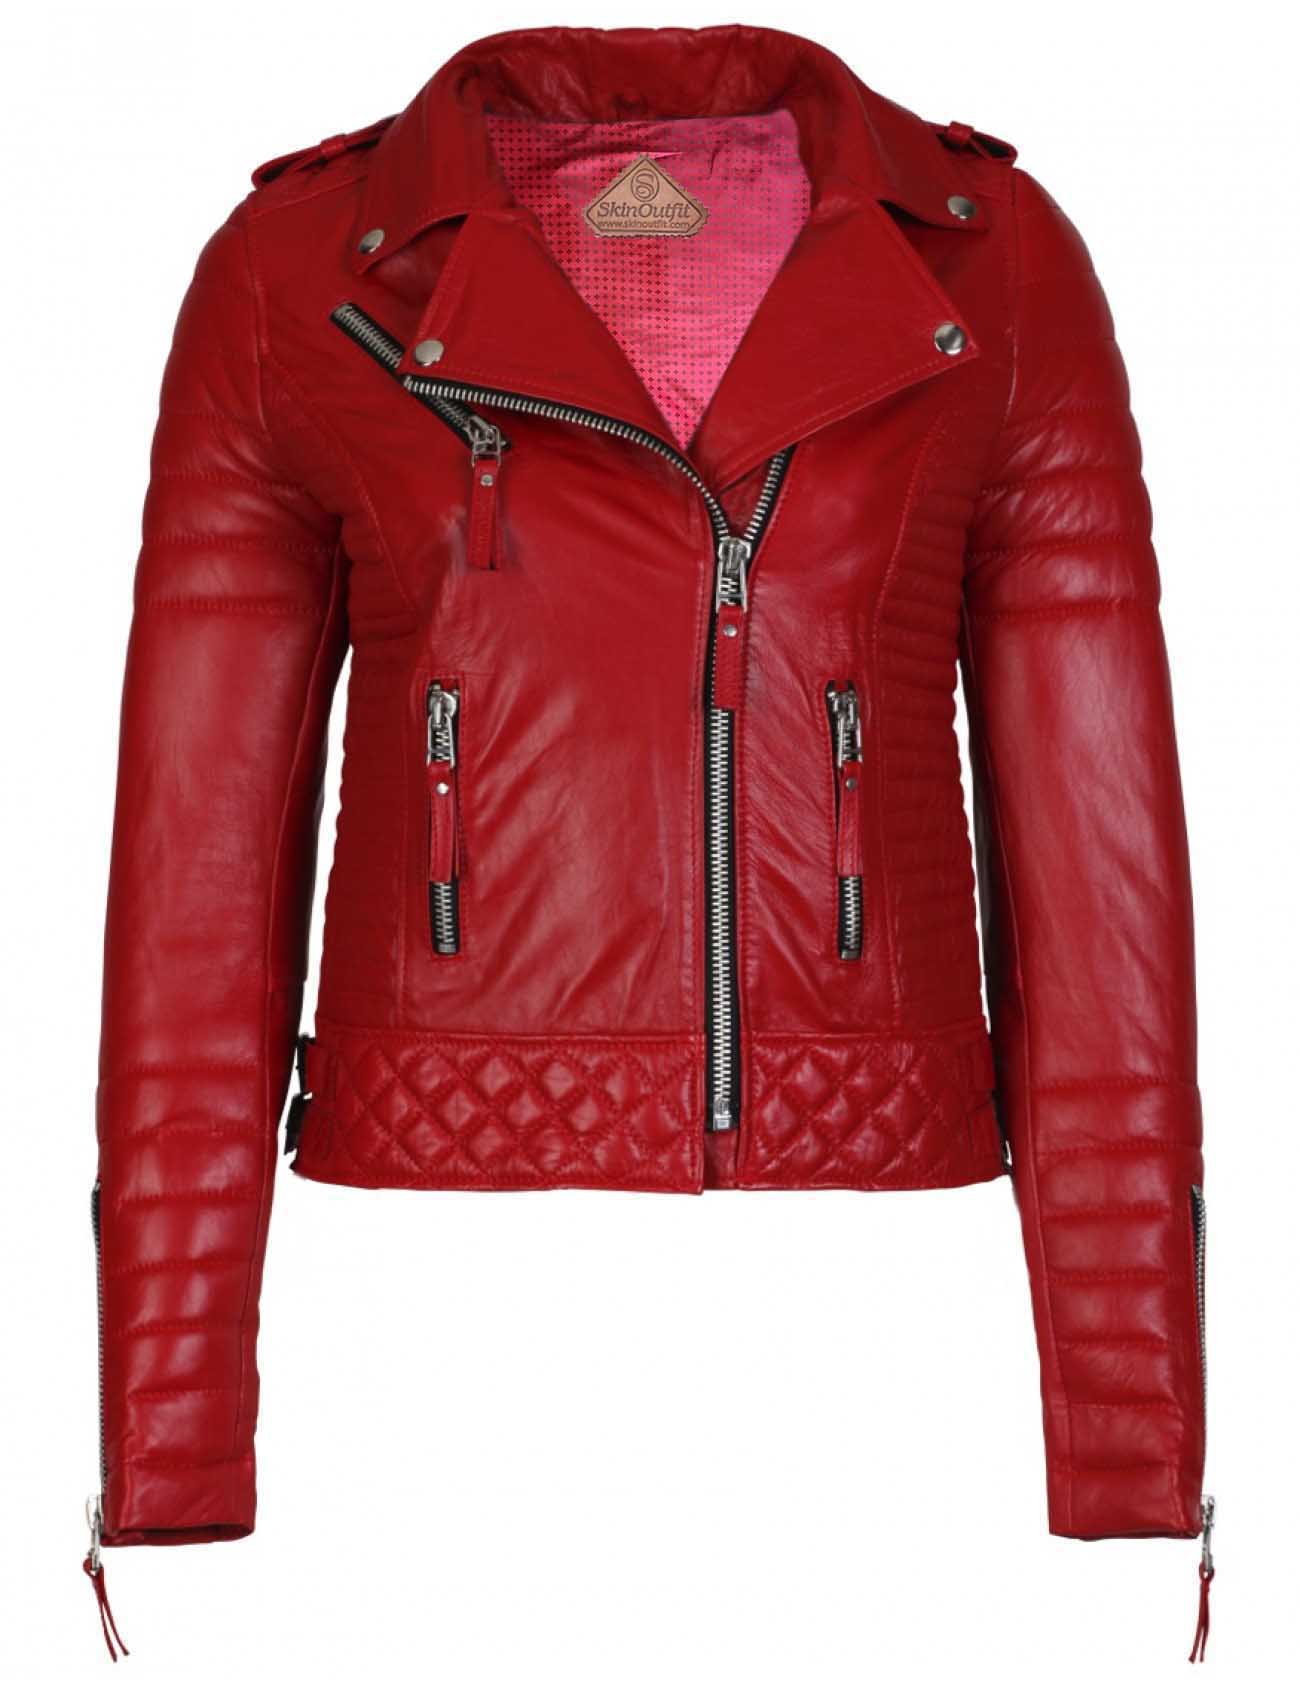 Women's Biker Leather Jacket Red freeshipping - SkinOutfit